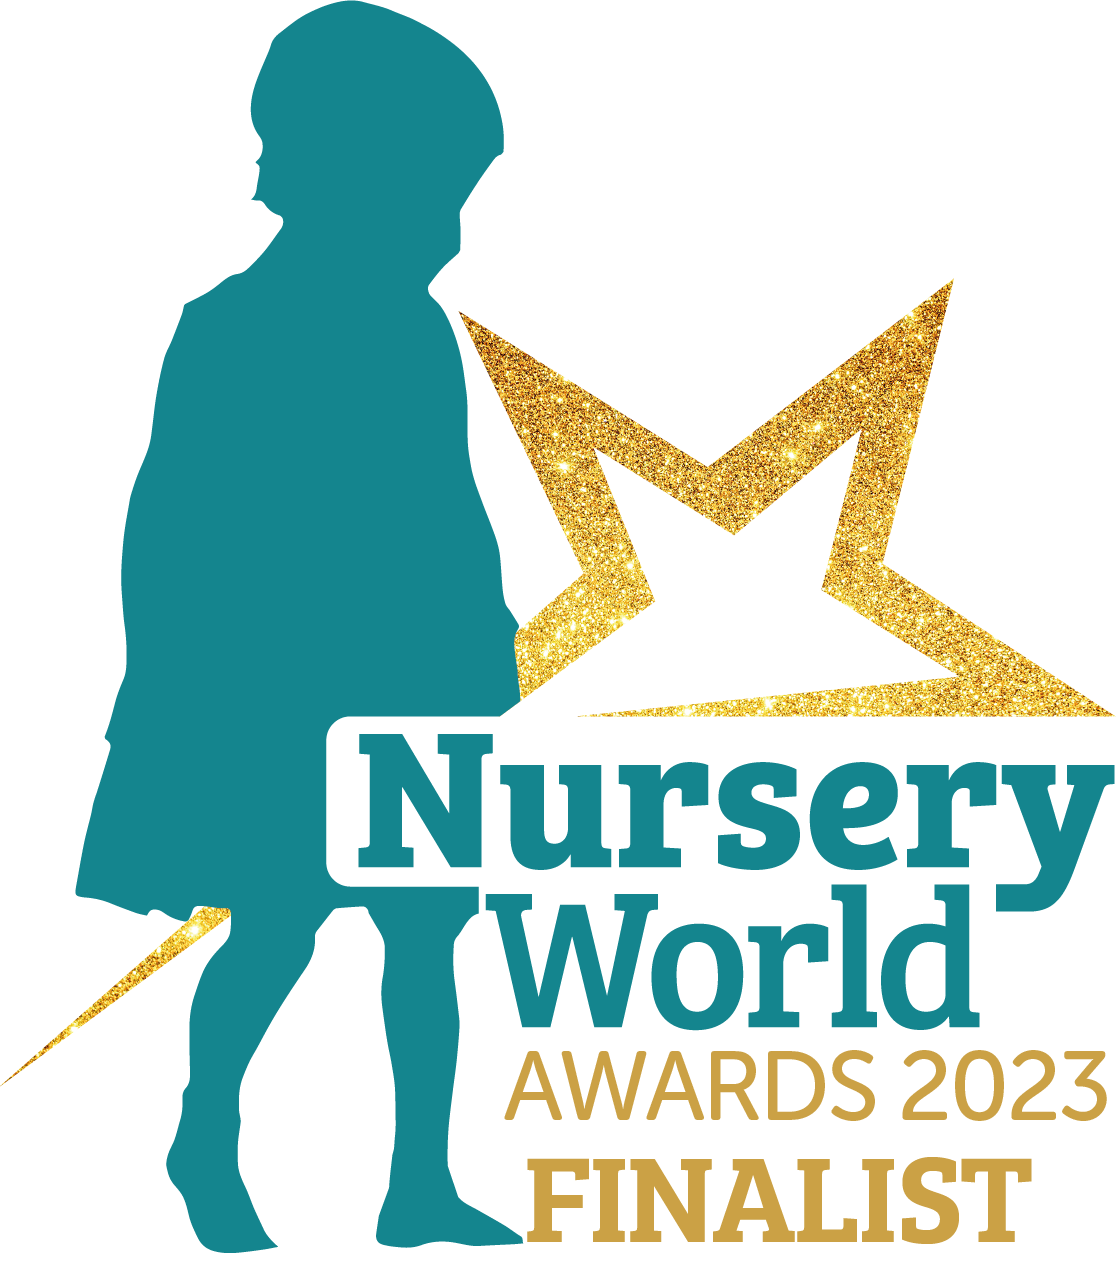 Finalists in the Nursery World Awards 2023